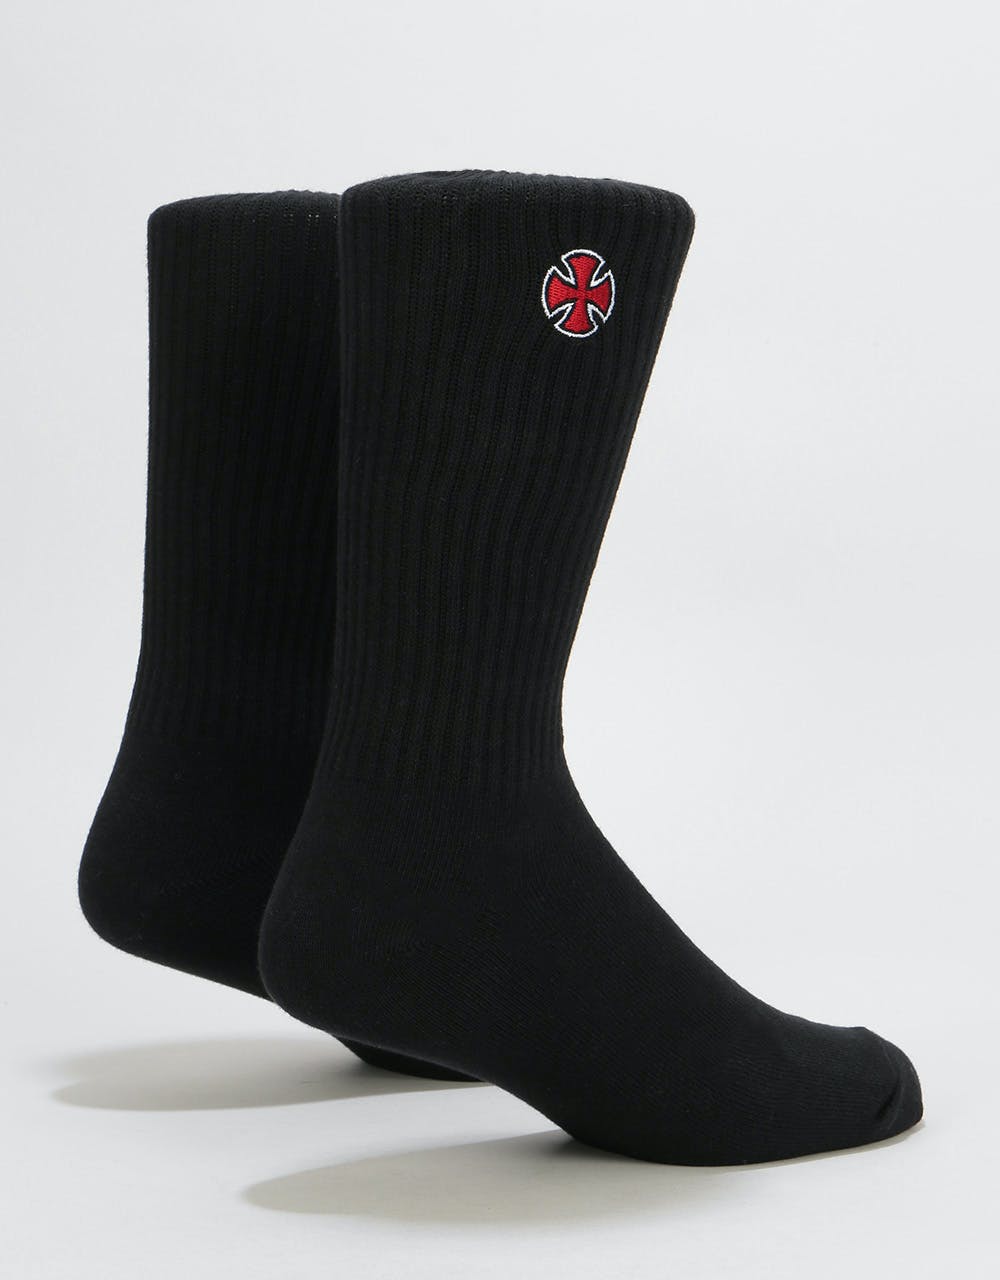 Independent Cross Socks - Black